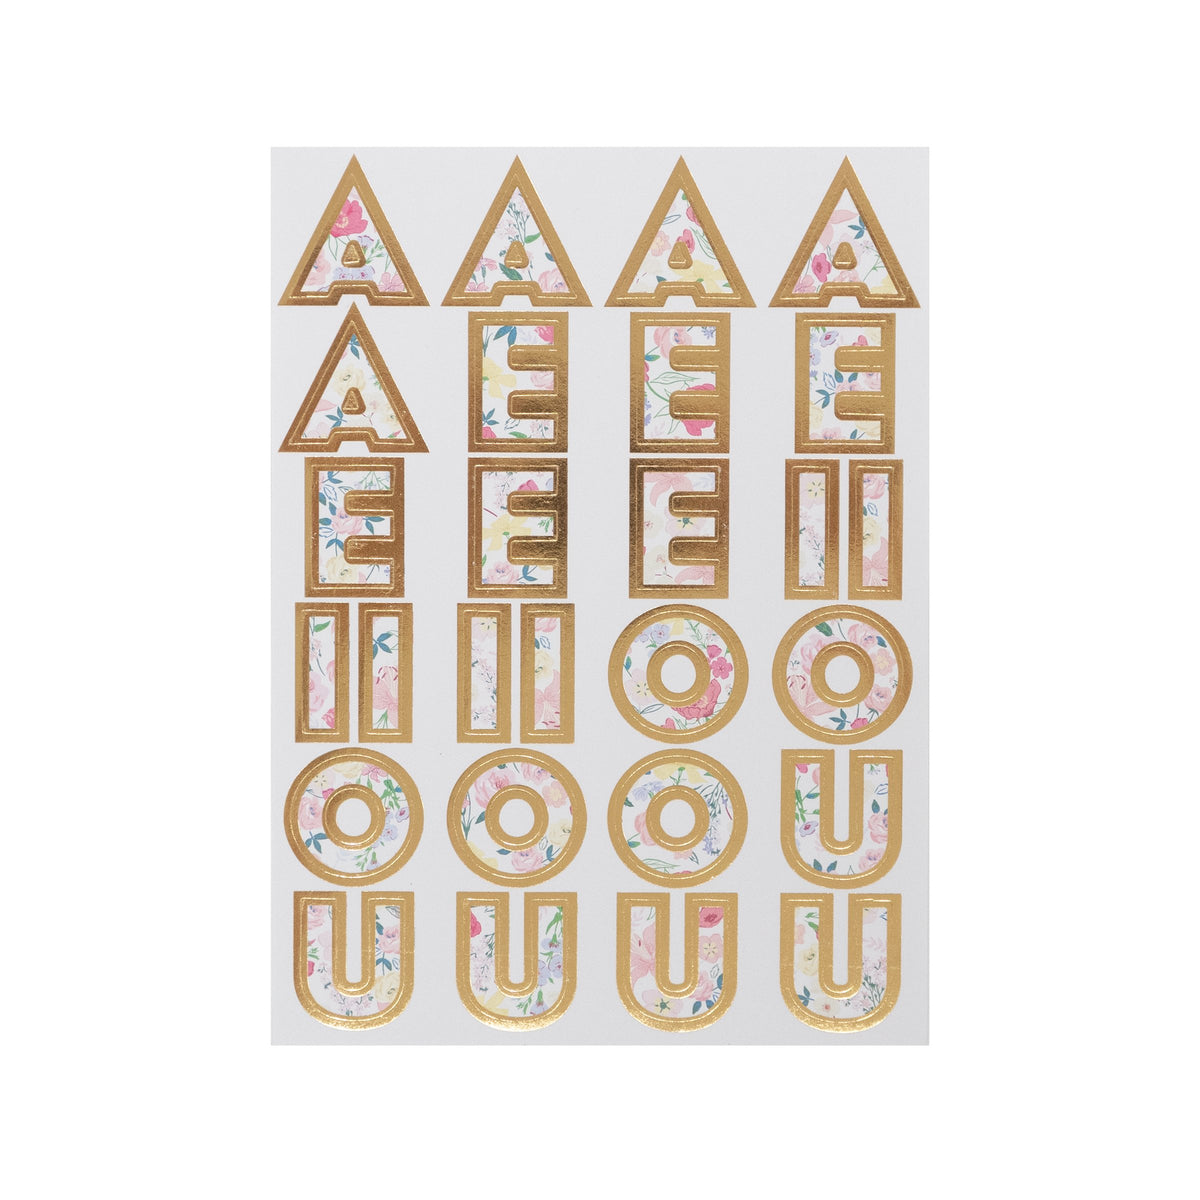 B lettre sticker alphabet autocollant meri meri or doré glitter